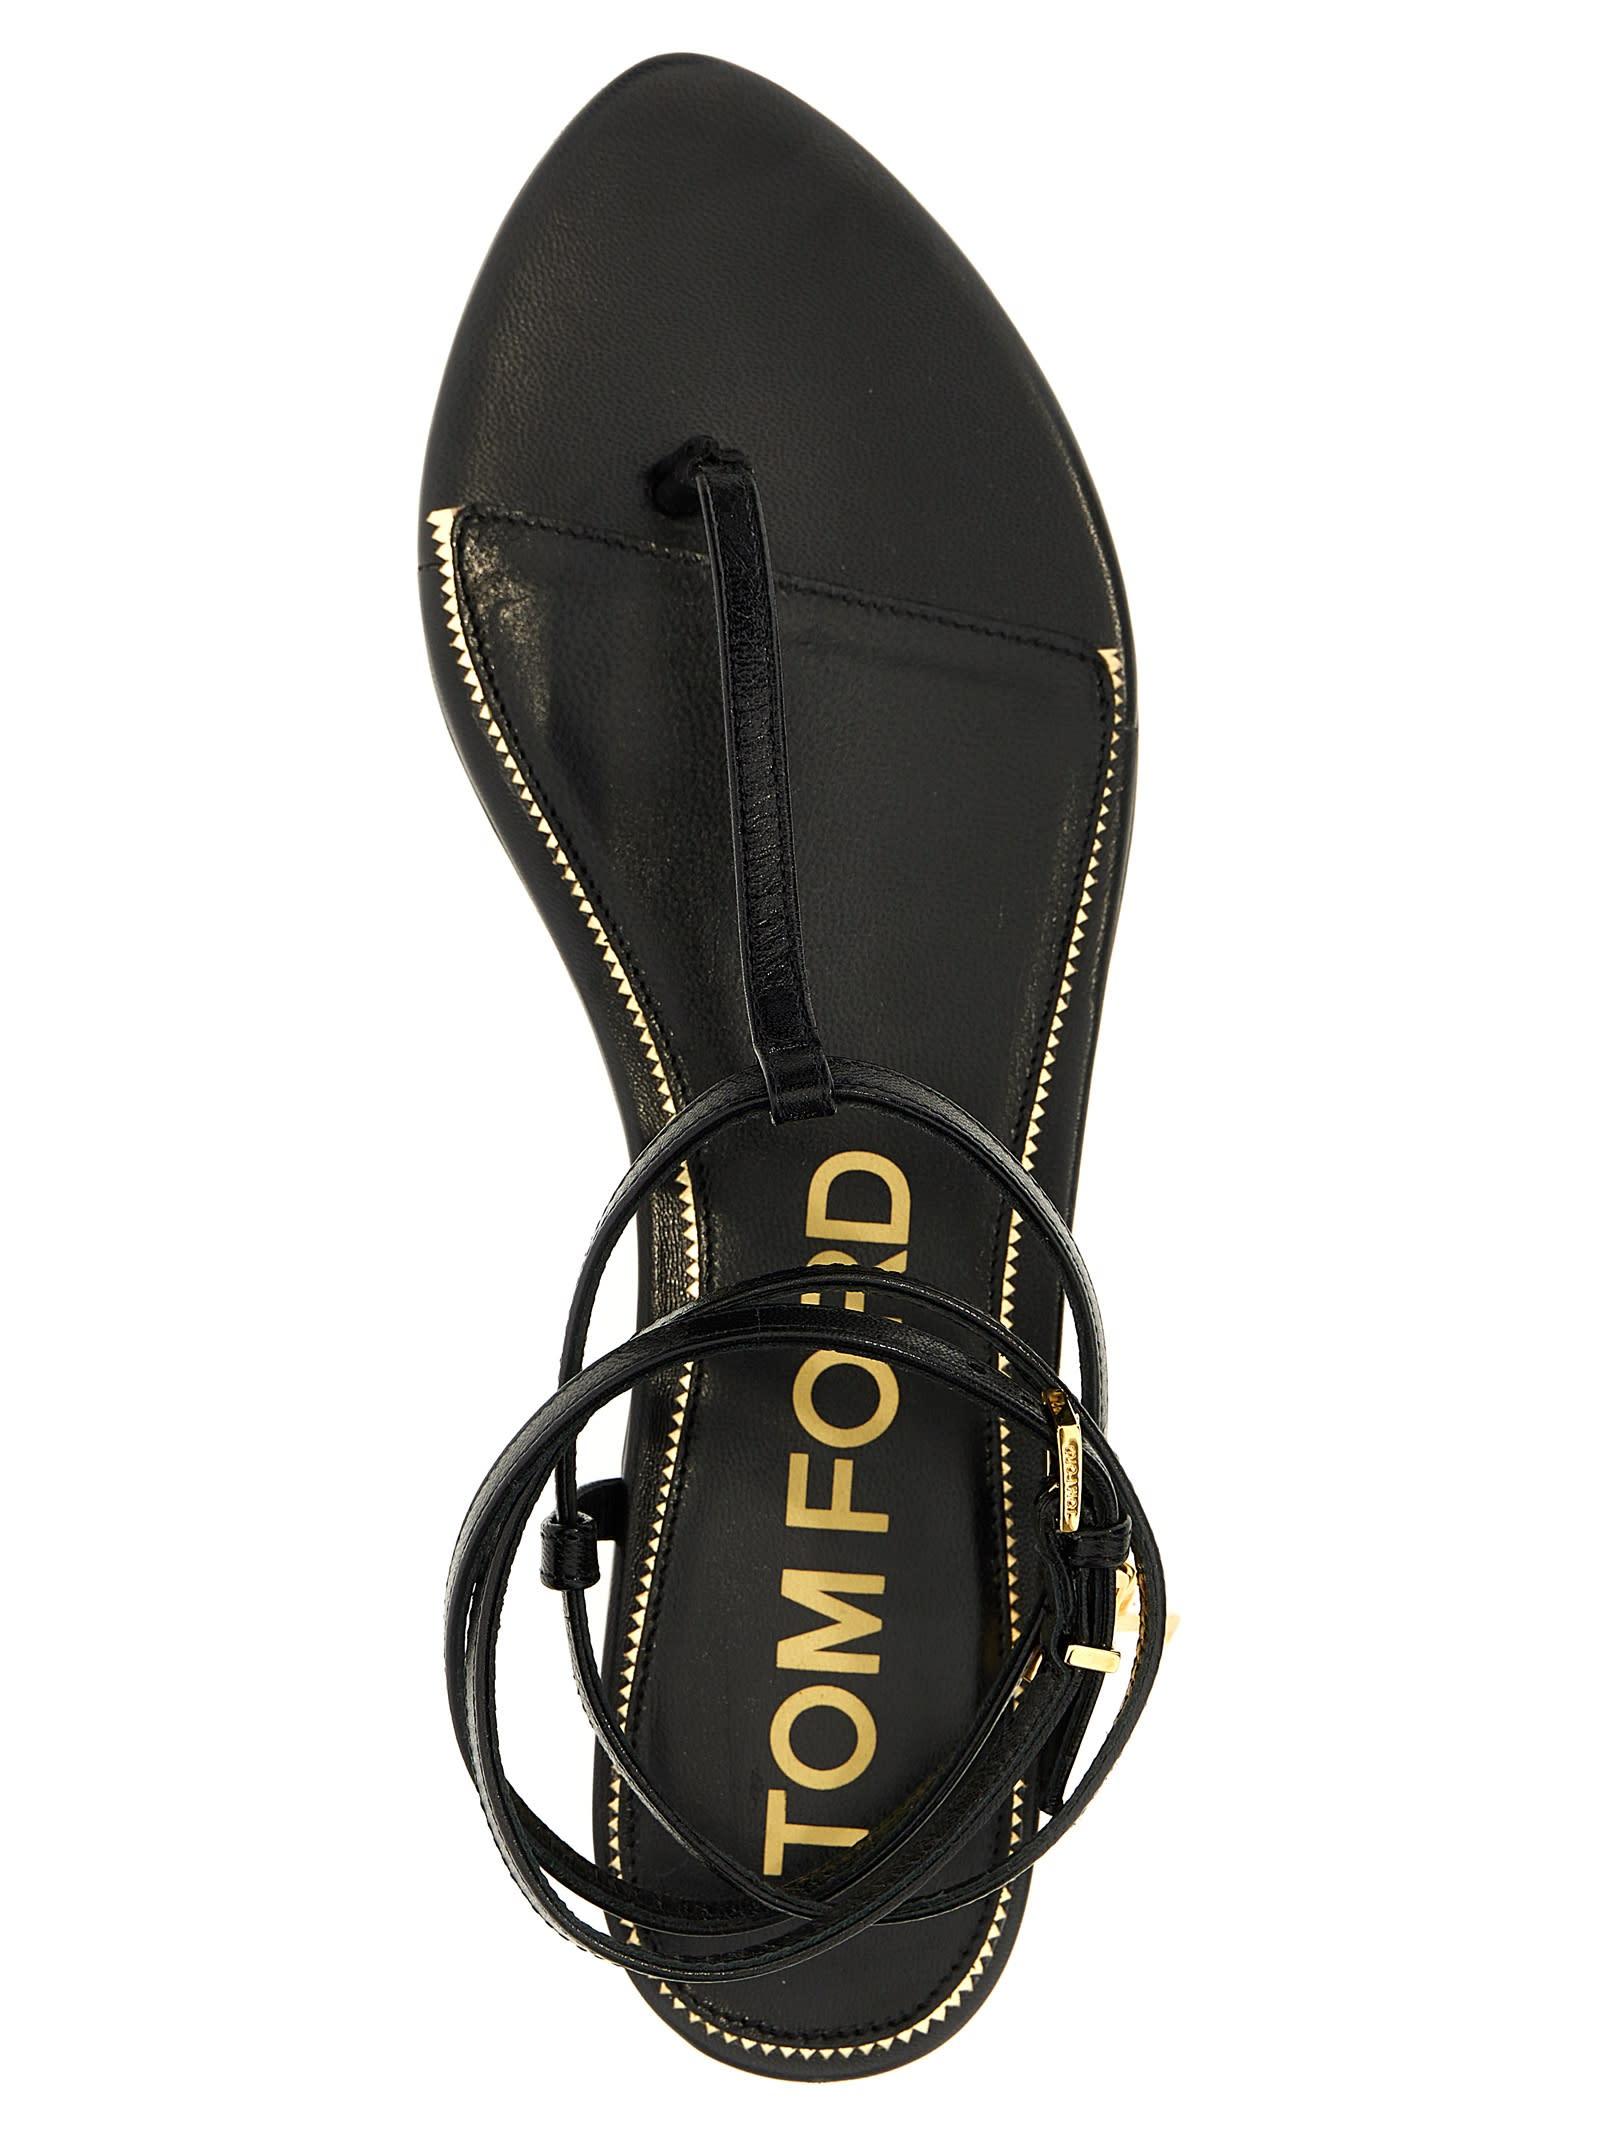 Tom Ford Padlock Detail Thong Sandals in Black | Lyst